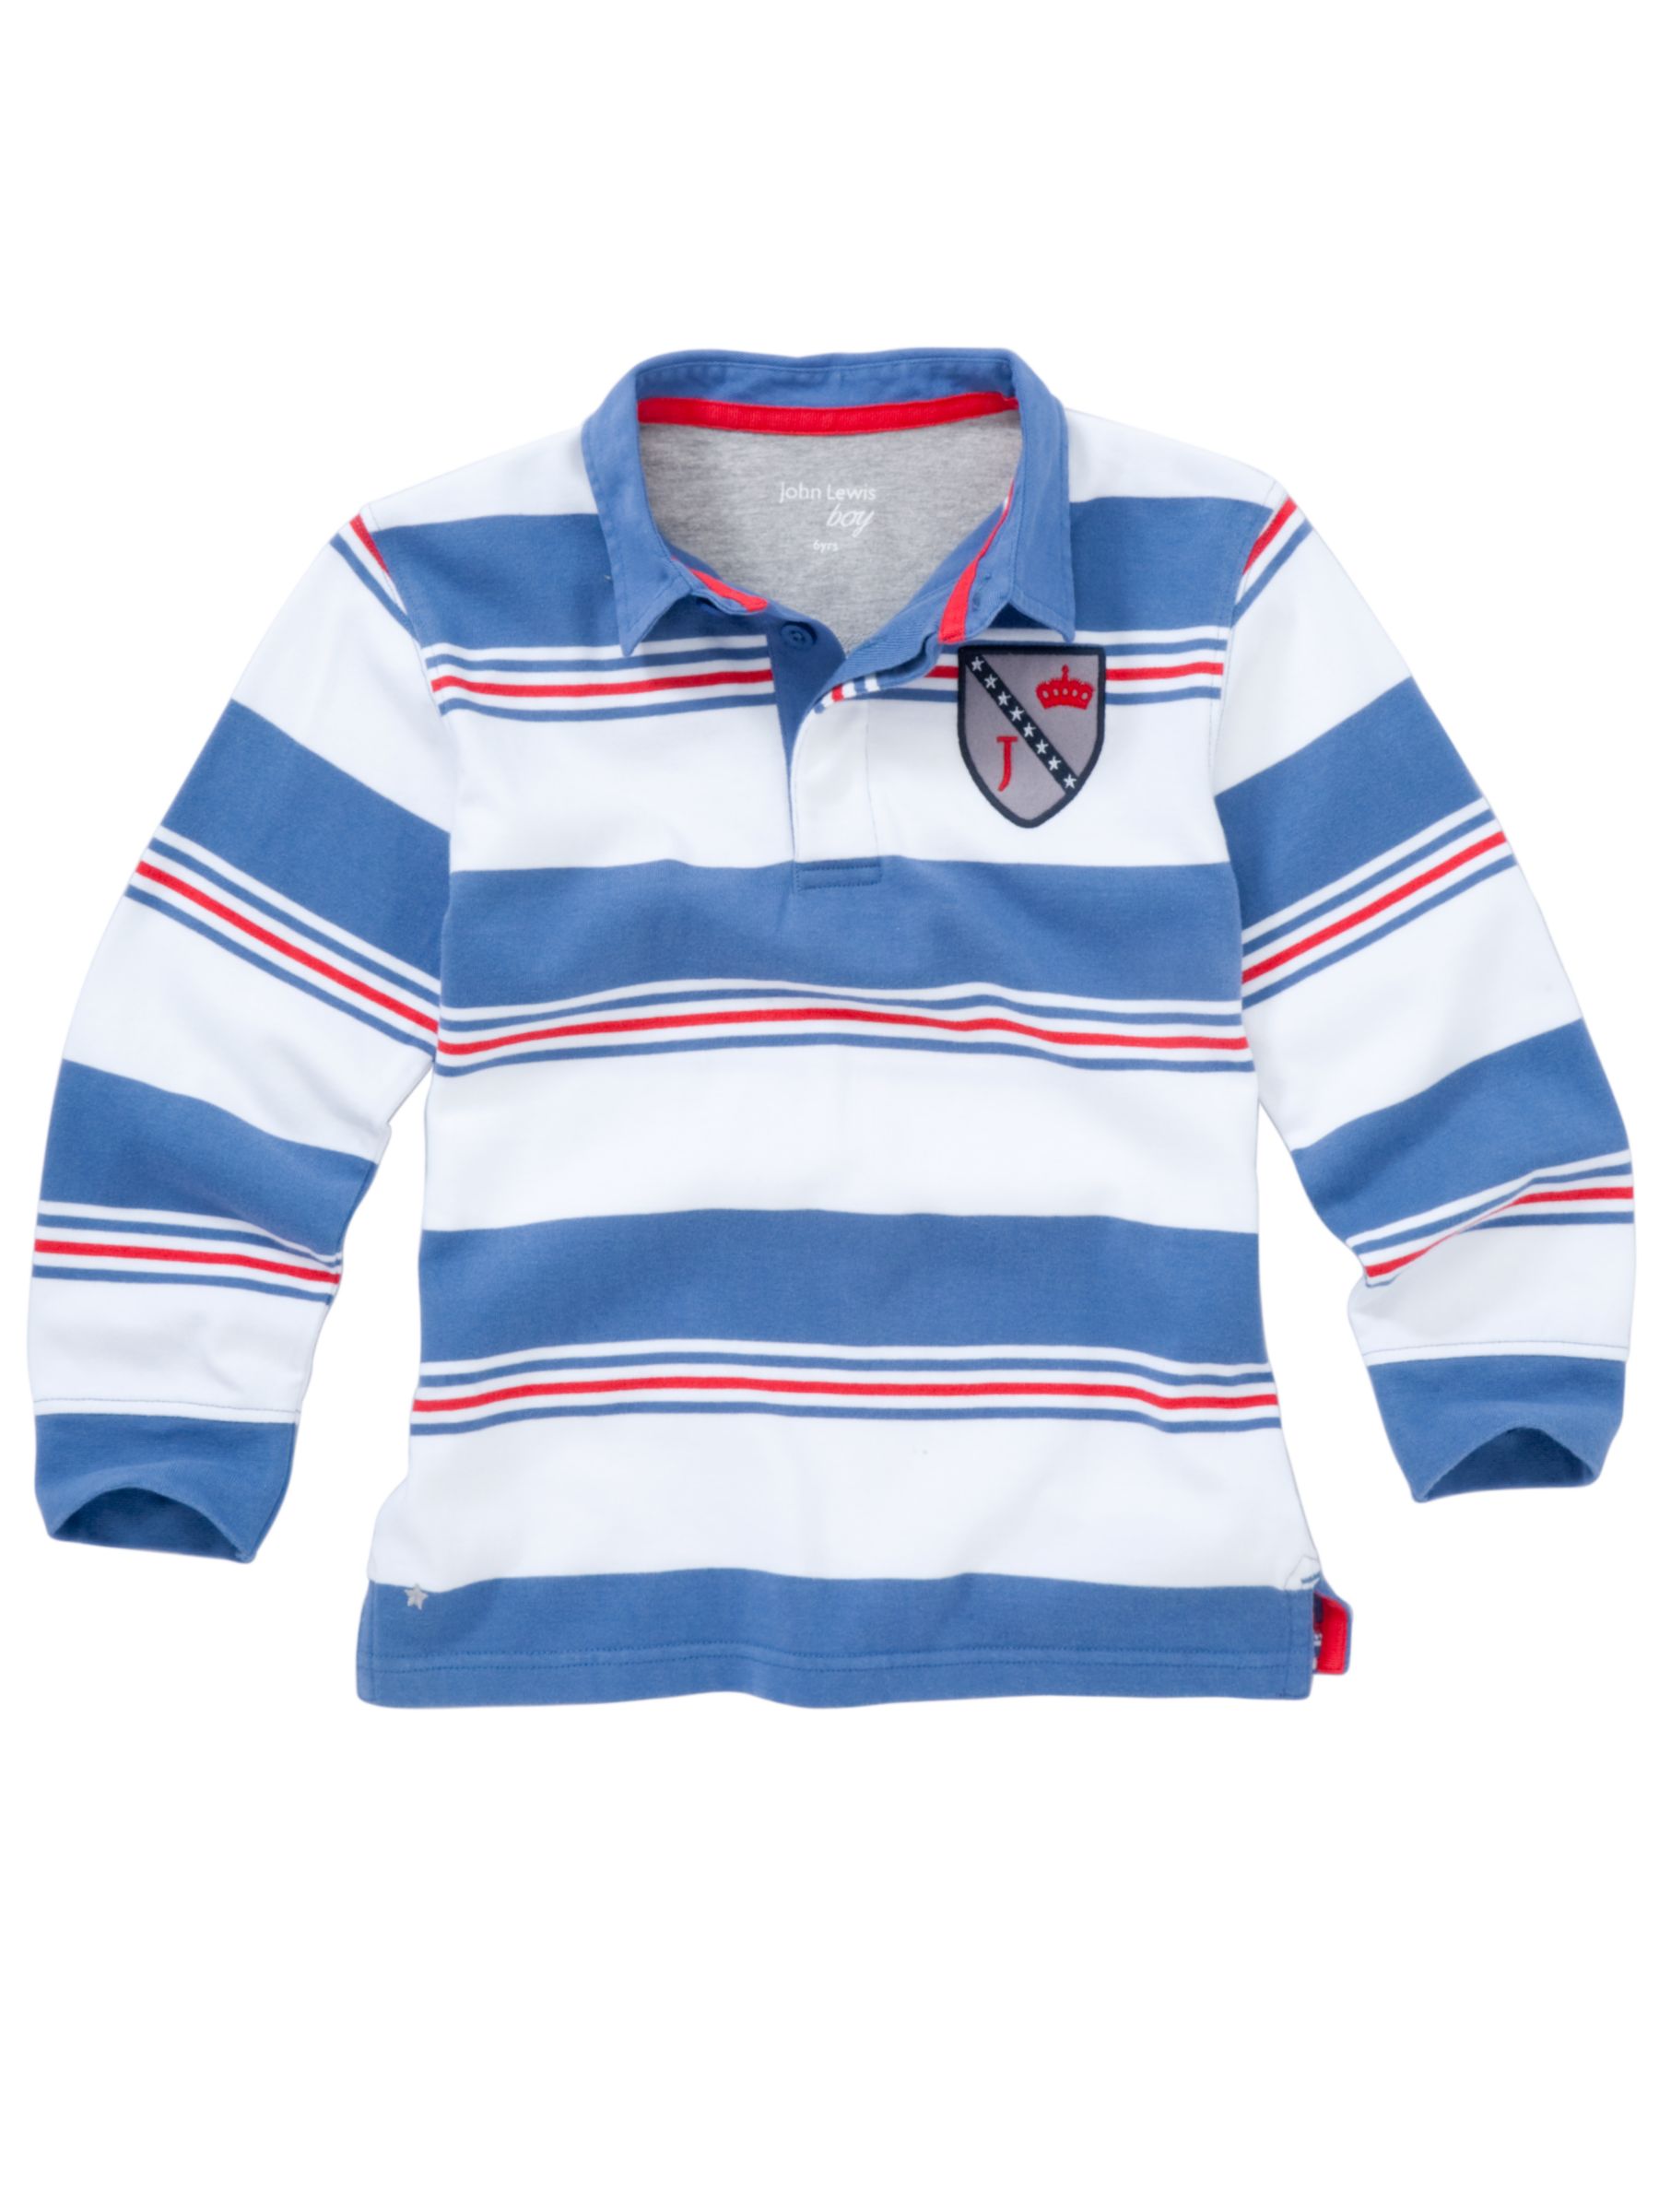 John Lewis Boy Stripe Print Rugby Shirt,